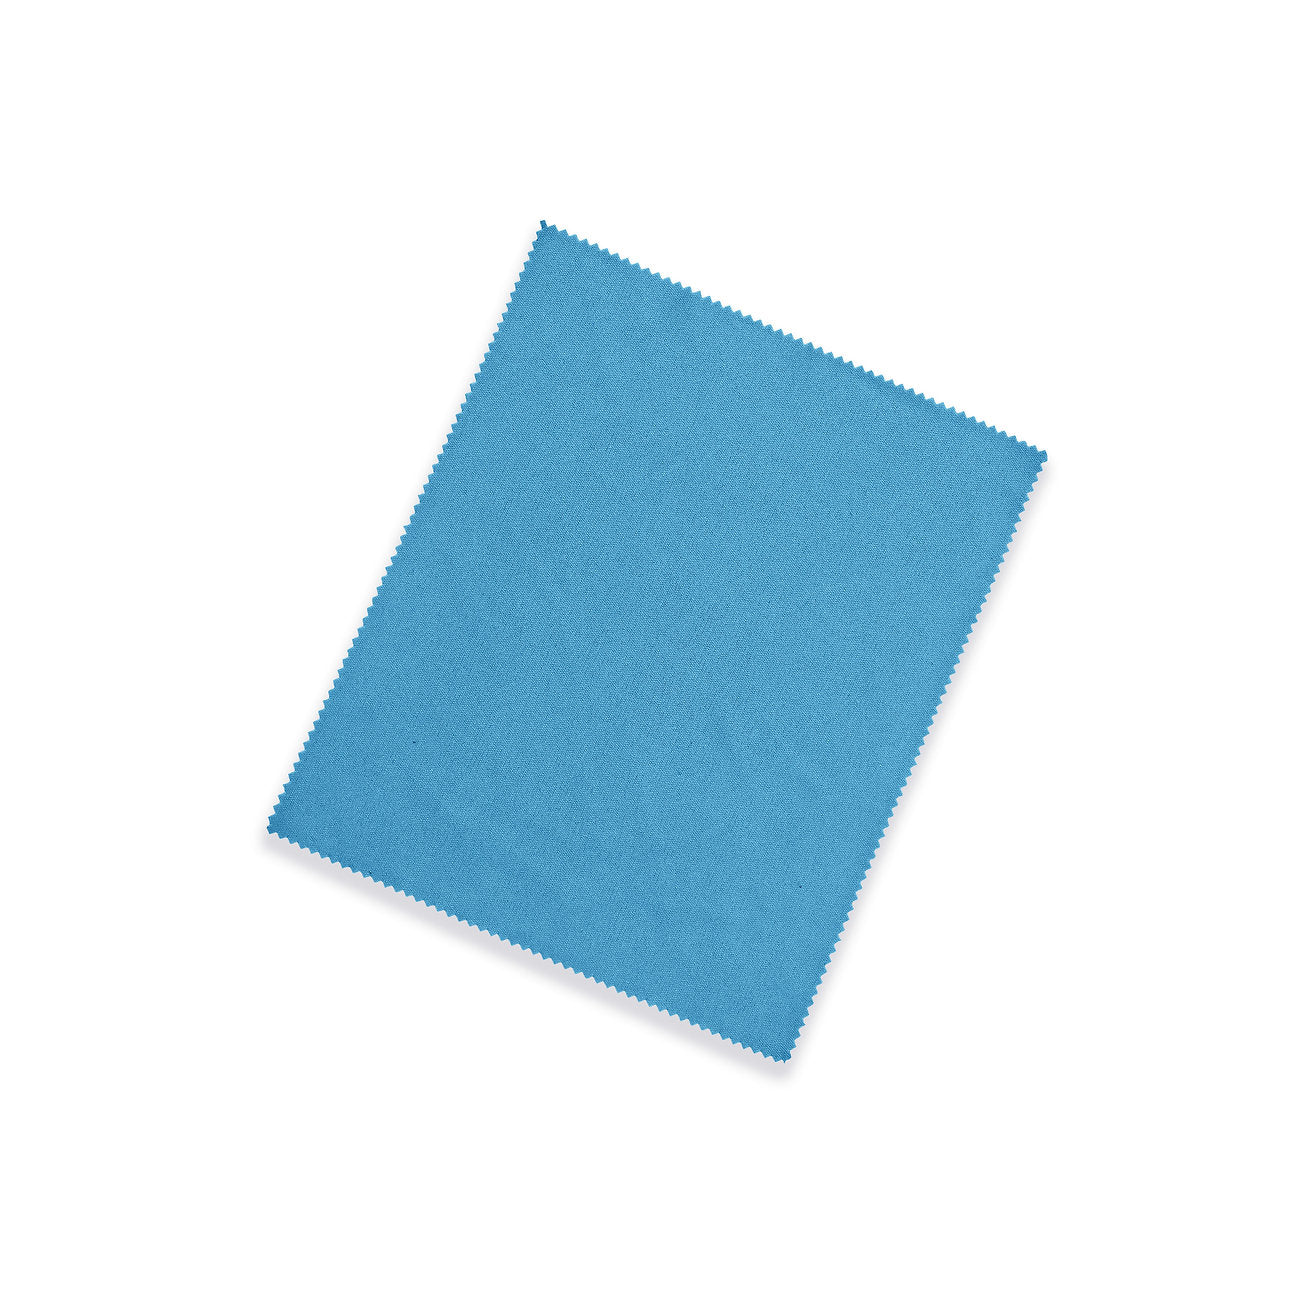 Light blue microfiber cloth